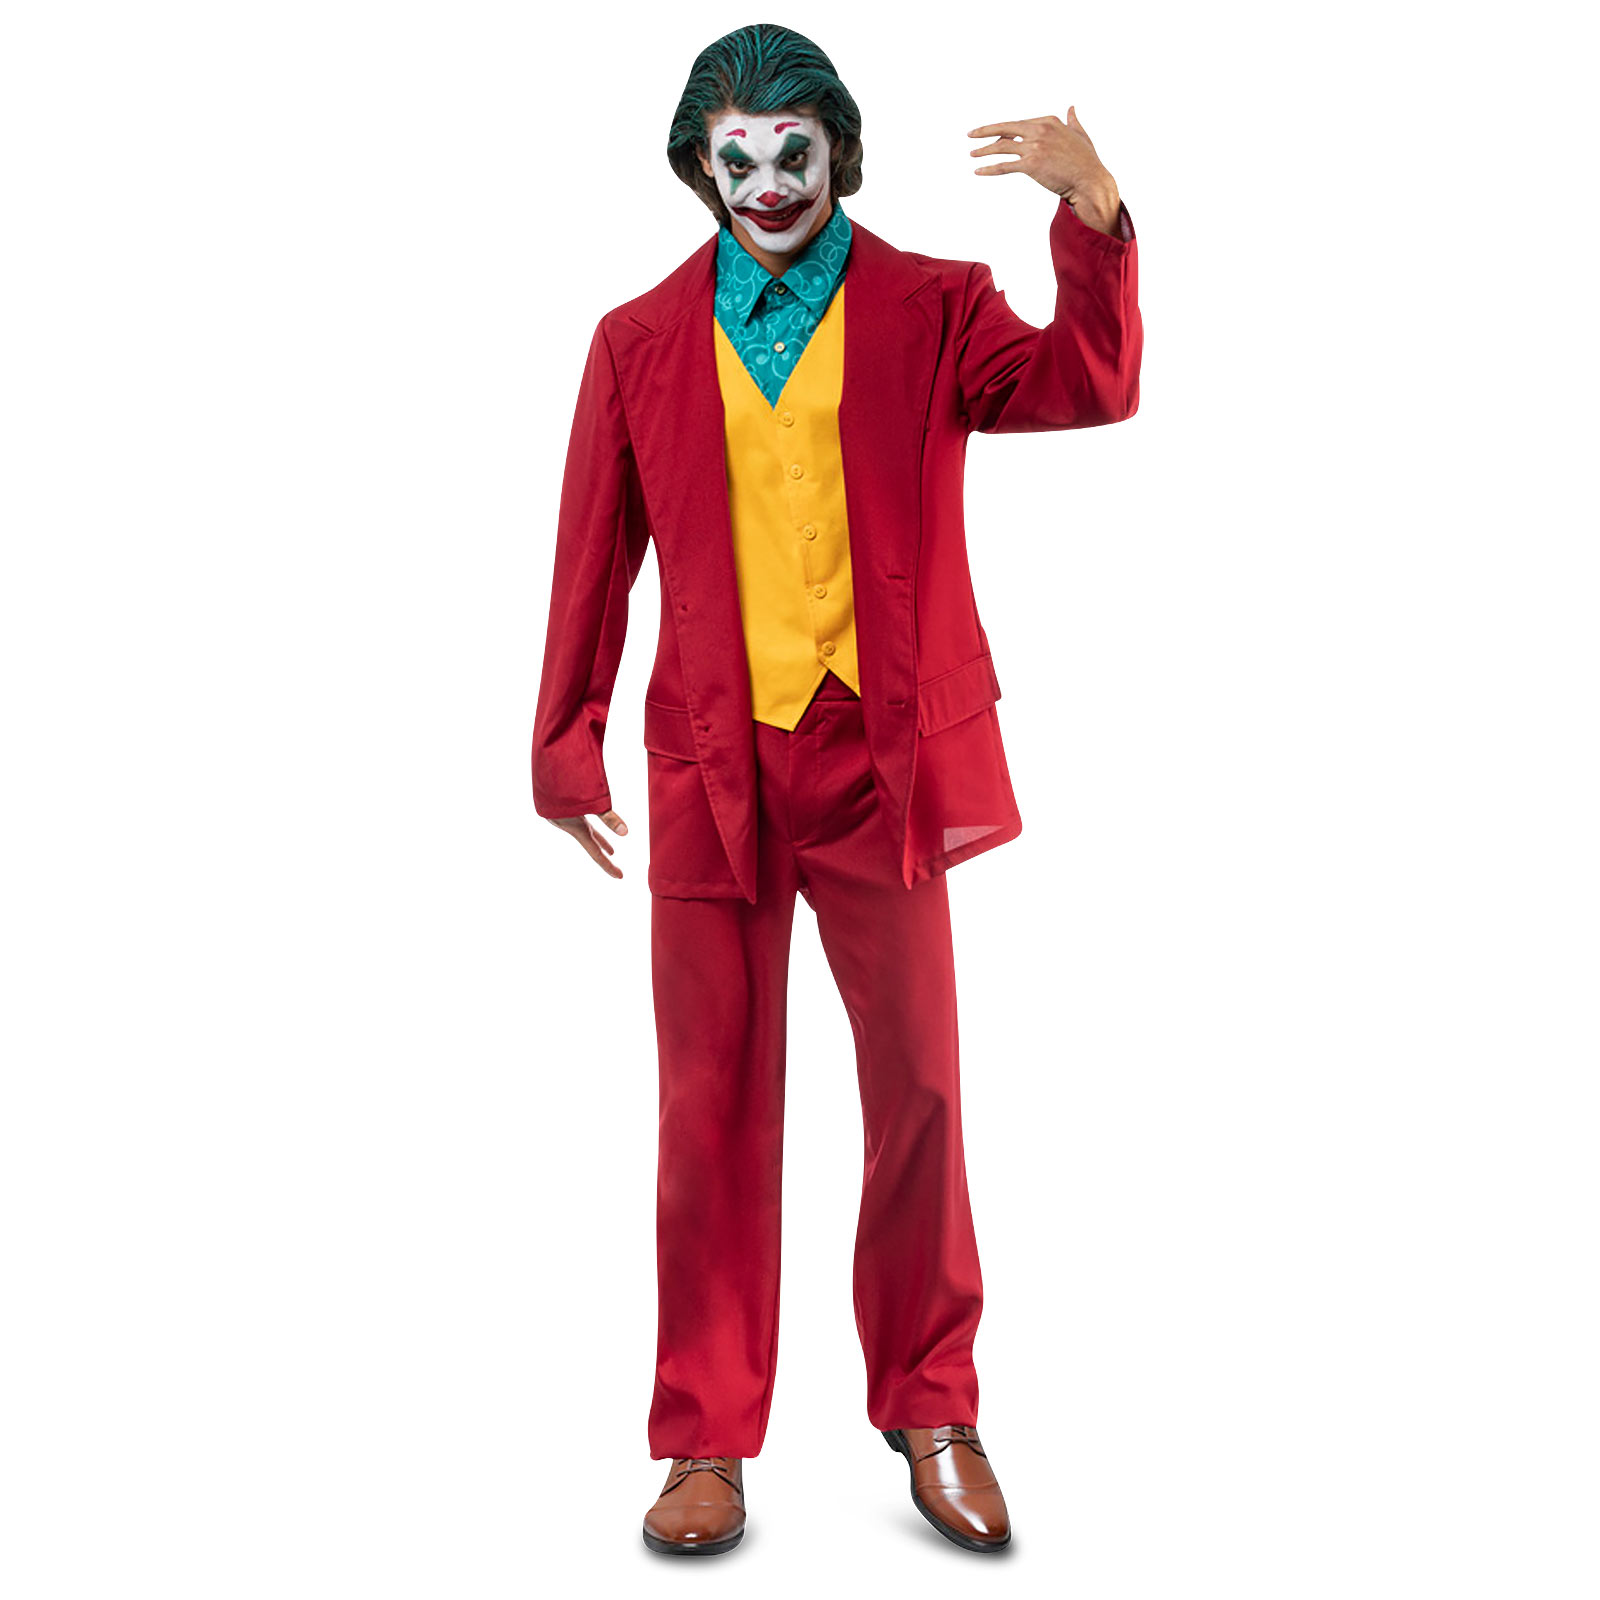 Mr. Crazy Costume Movie Suit for Joker Fans red